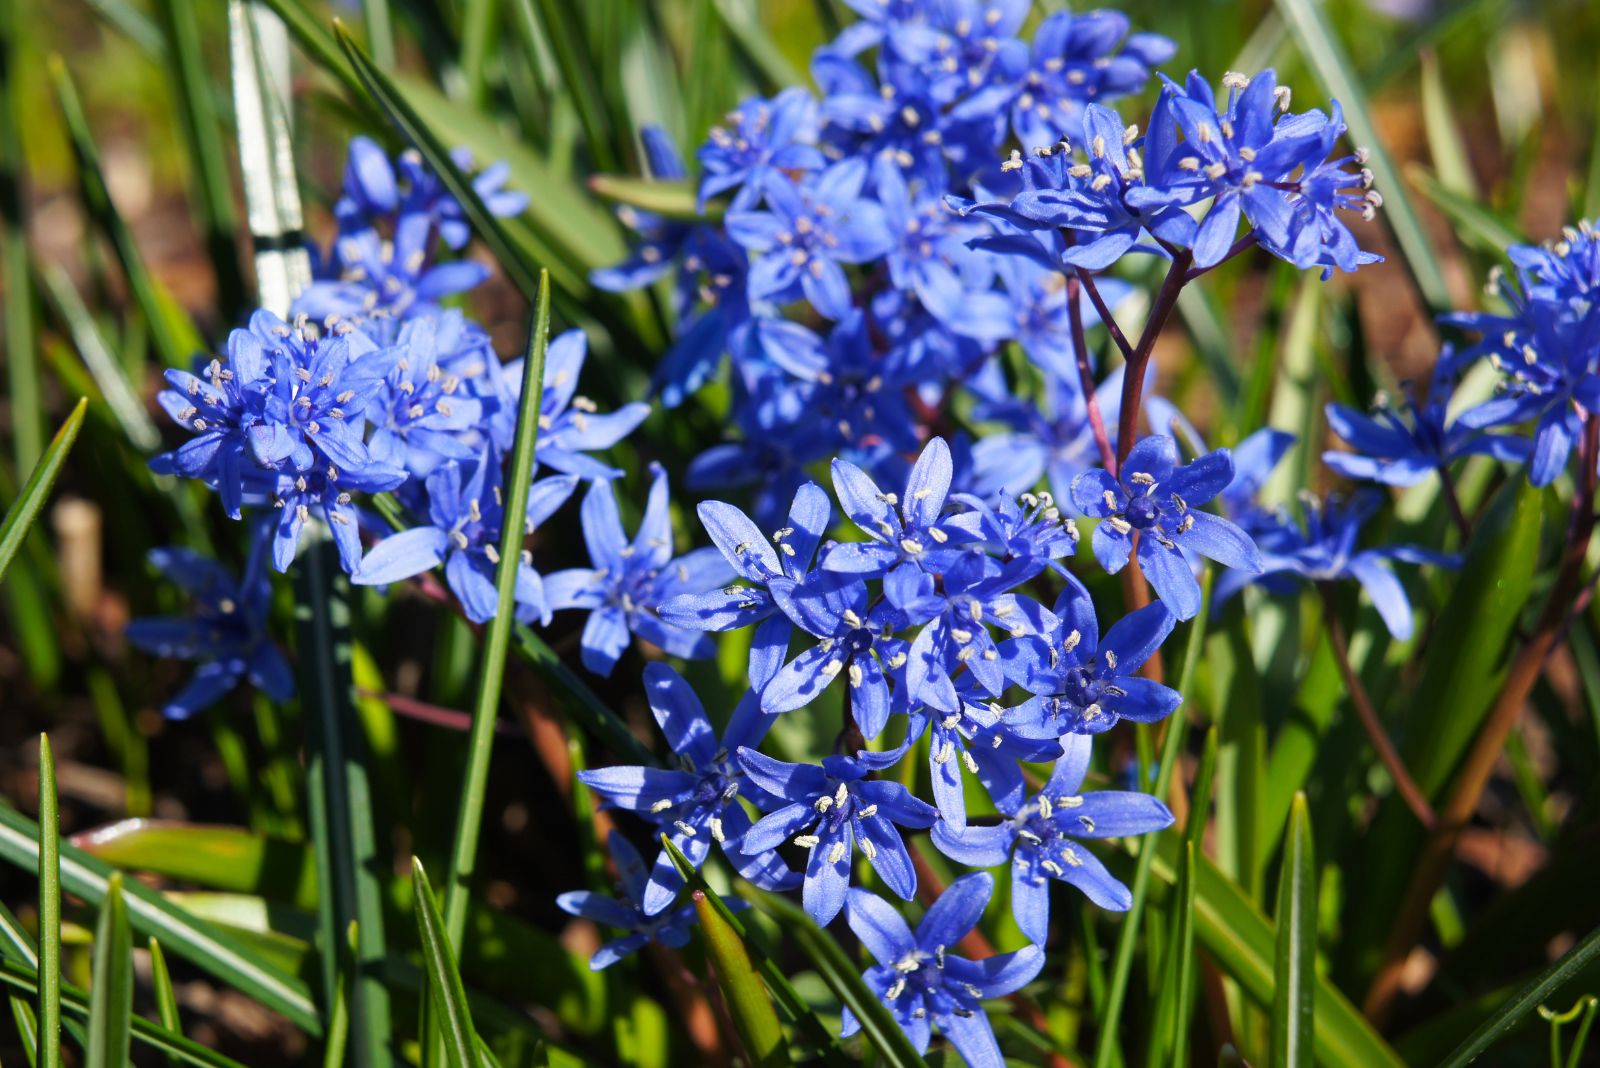 Scilla bifolia blue flowers in sunlight